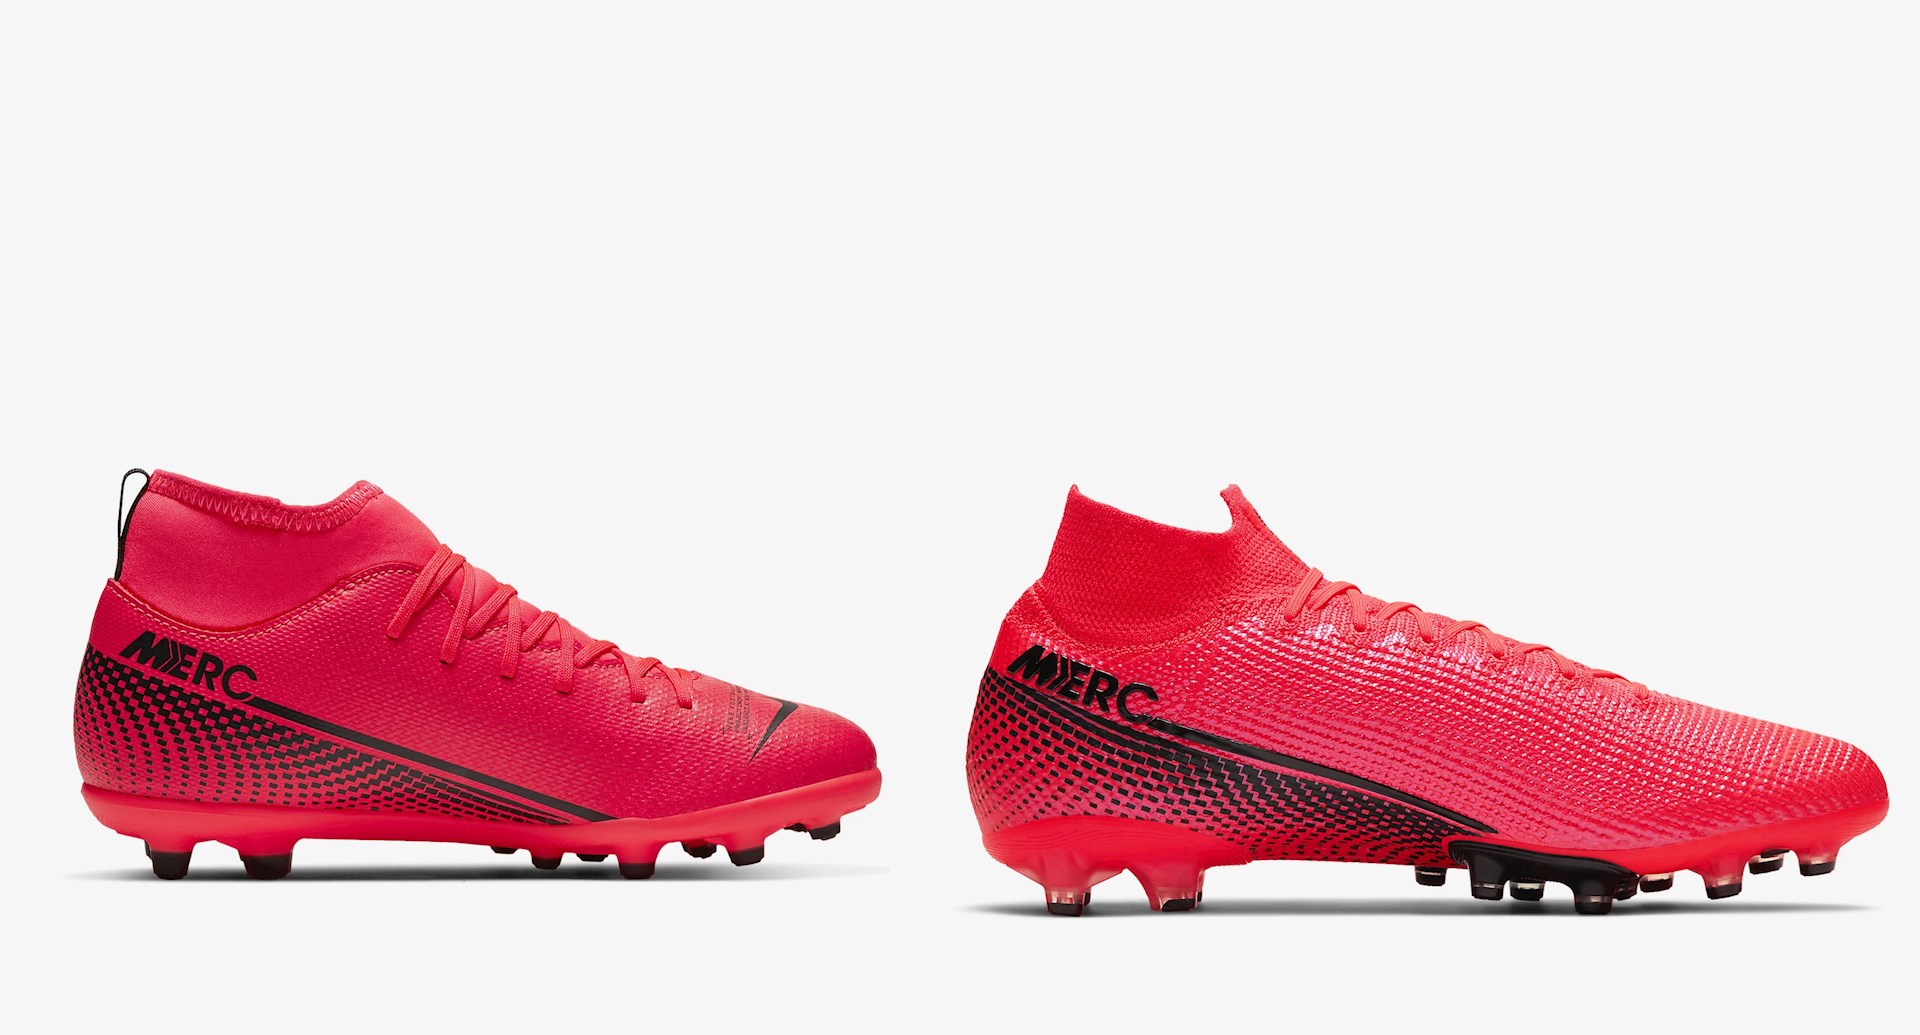 Goedkope Nike Superfly voetbalschoenen - Voetbal-schoenen.eu